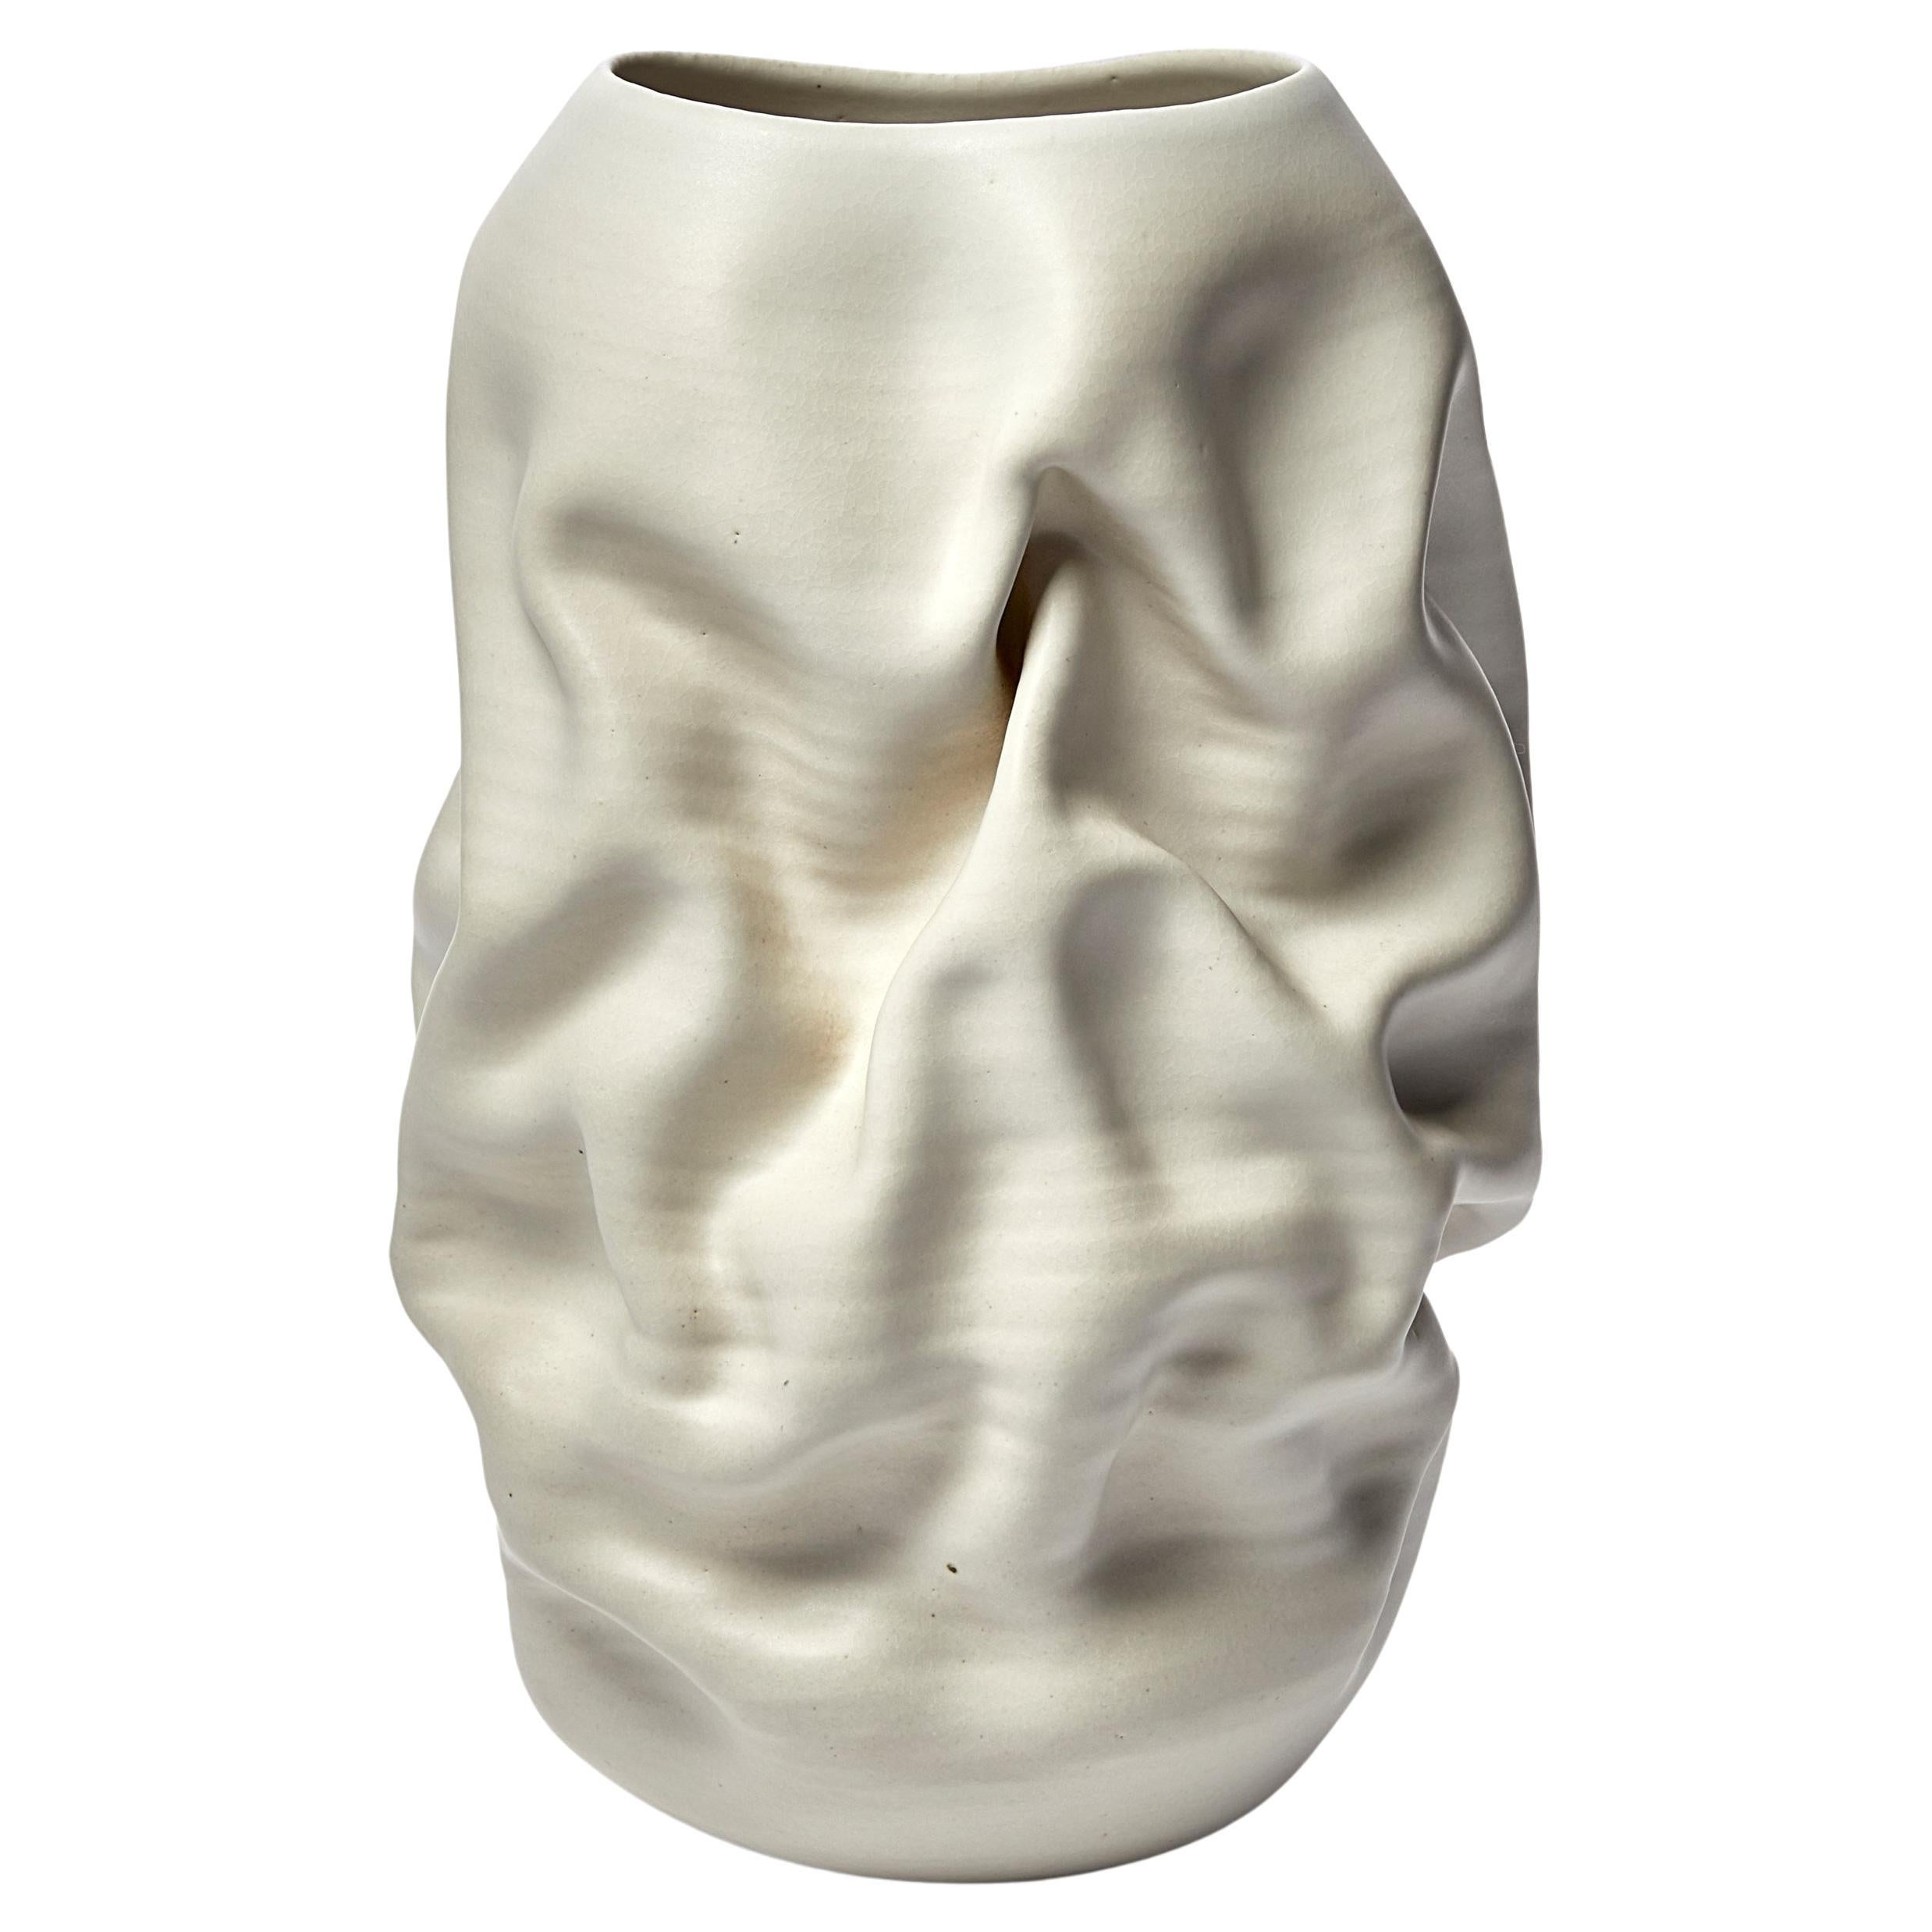 Großes weißes Keramikgefäß in gekrümmter Form Nr 118, Nicholas Arroyave-Portela